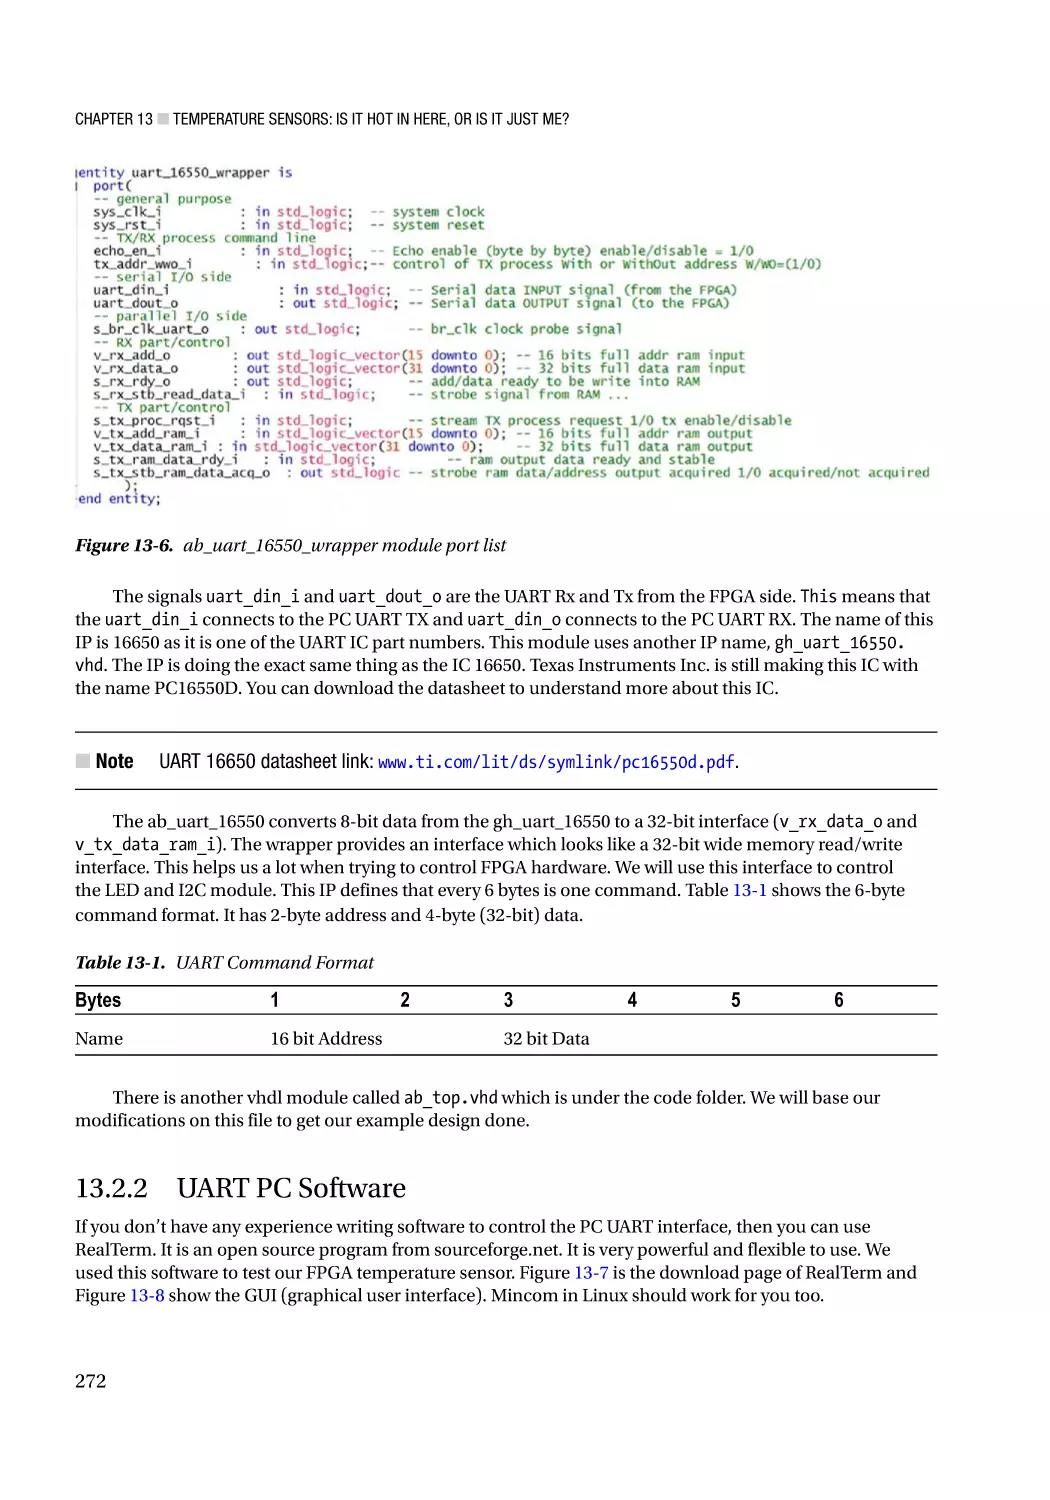 13.2.2 UART PC Software